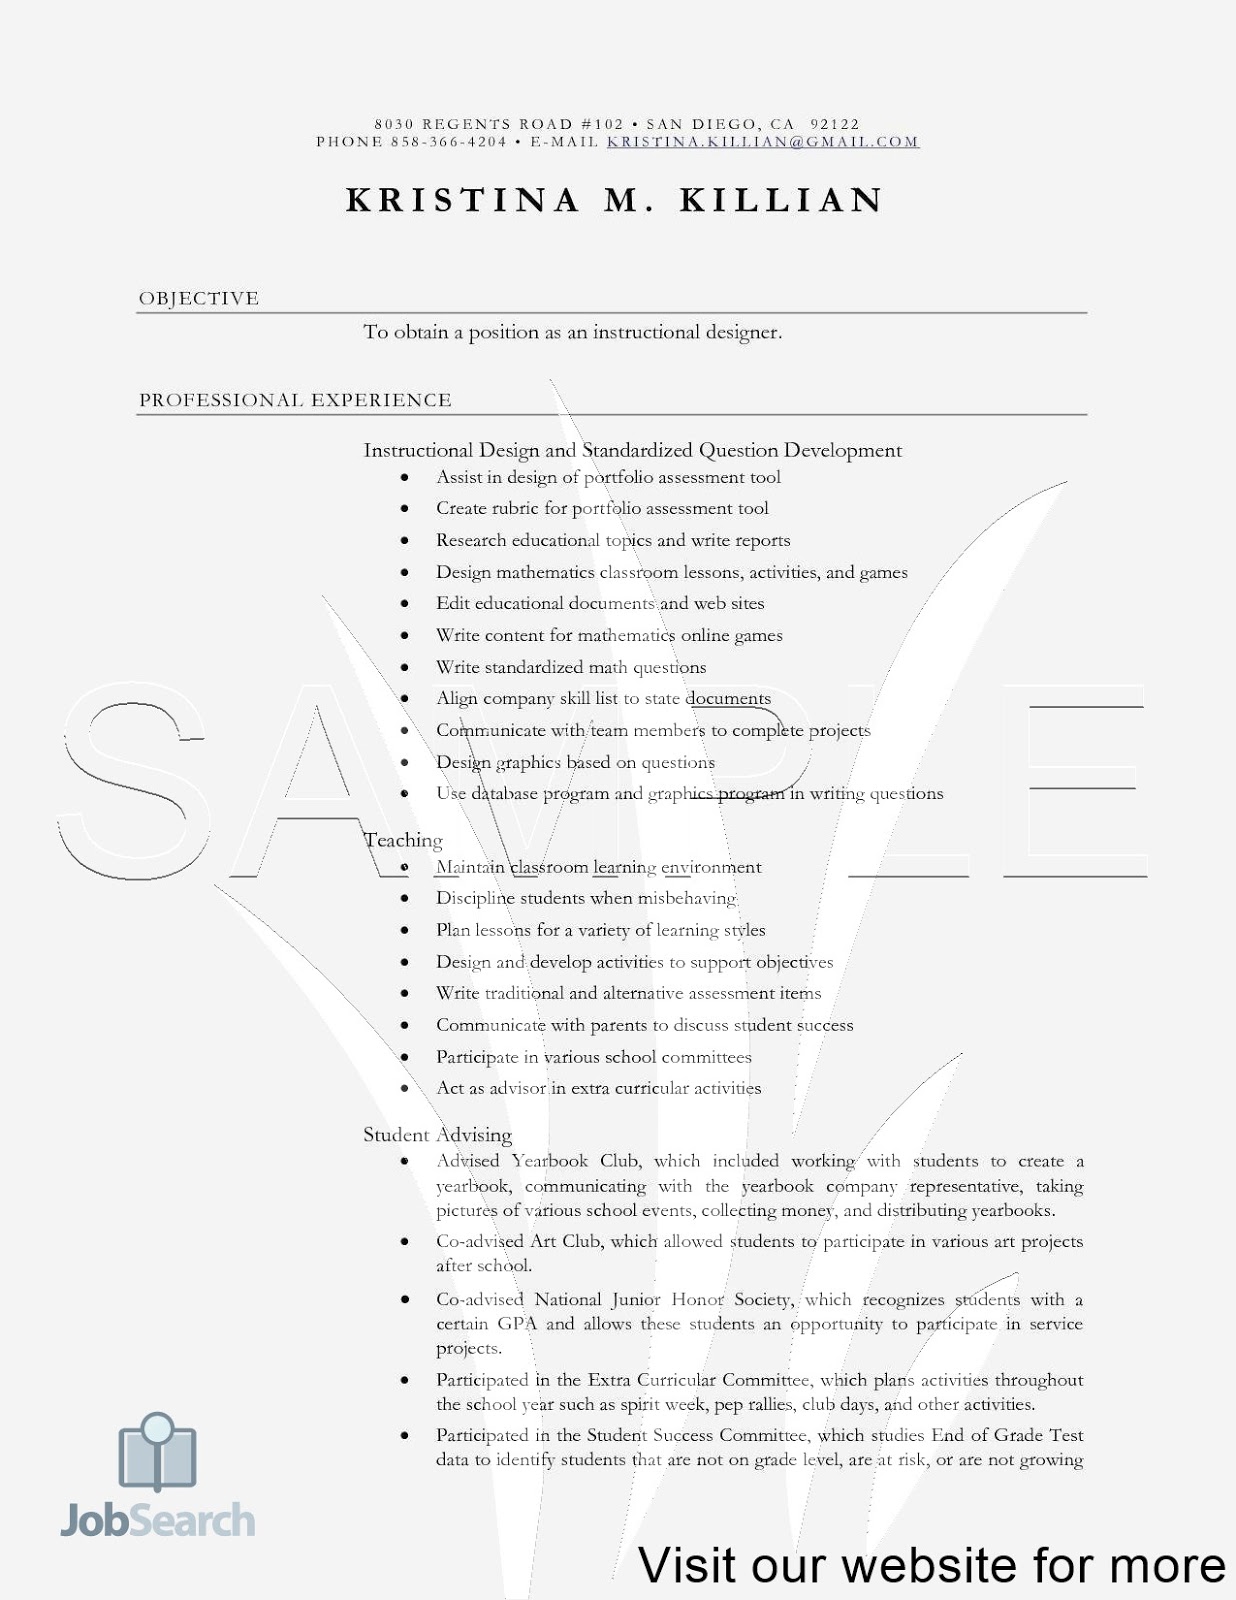 resume sample format simple resume format in word simple resume sample simple resume format pdf simple resume examples